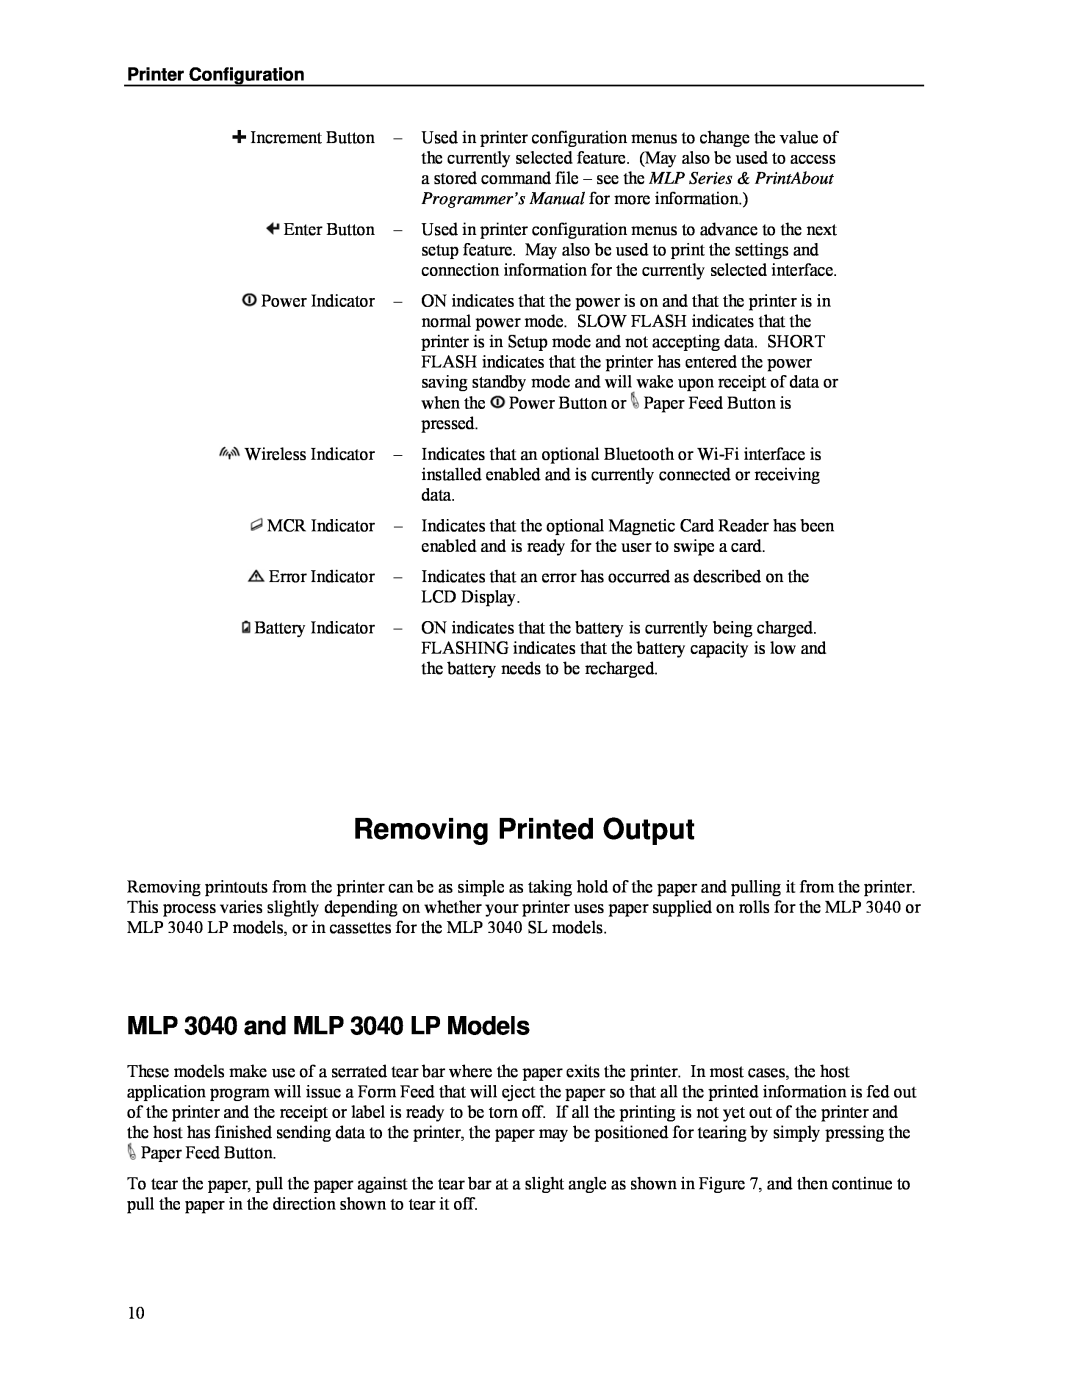 Psion Teklogix MLP 3040 Series manual Removing Printed Output, MLP 3040 and MLP 3040 LP Models, Printer Configuration 